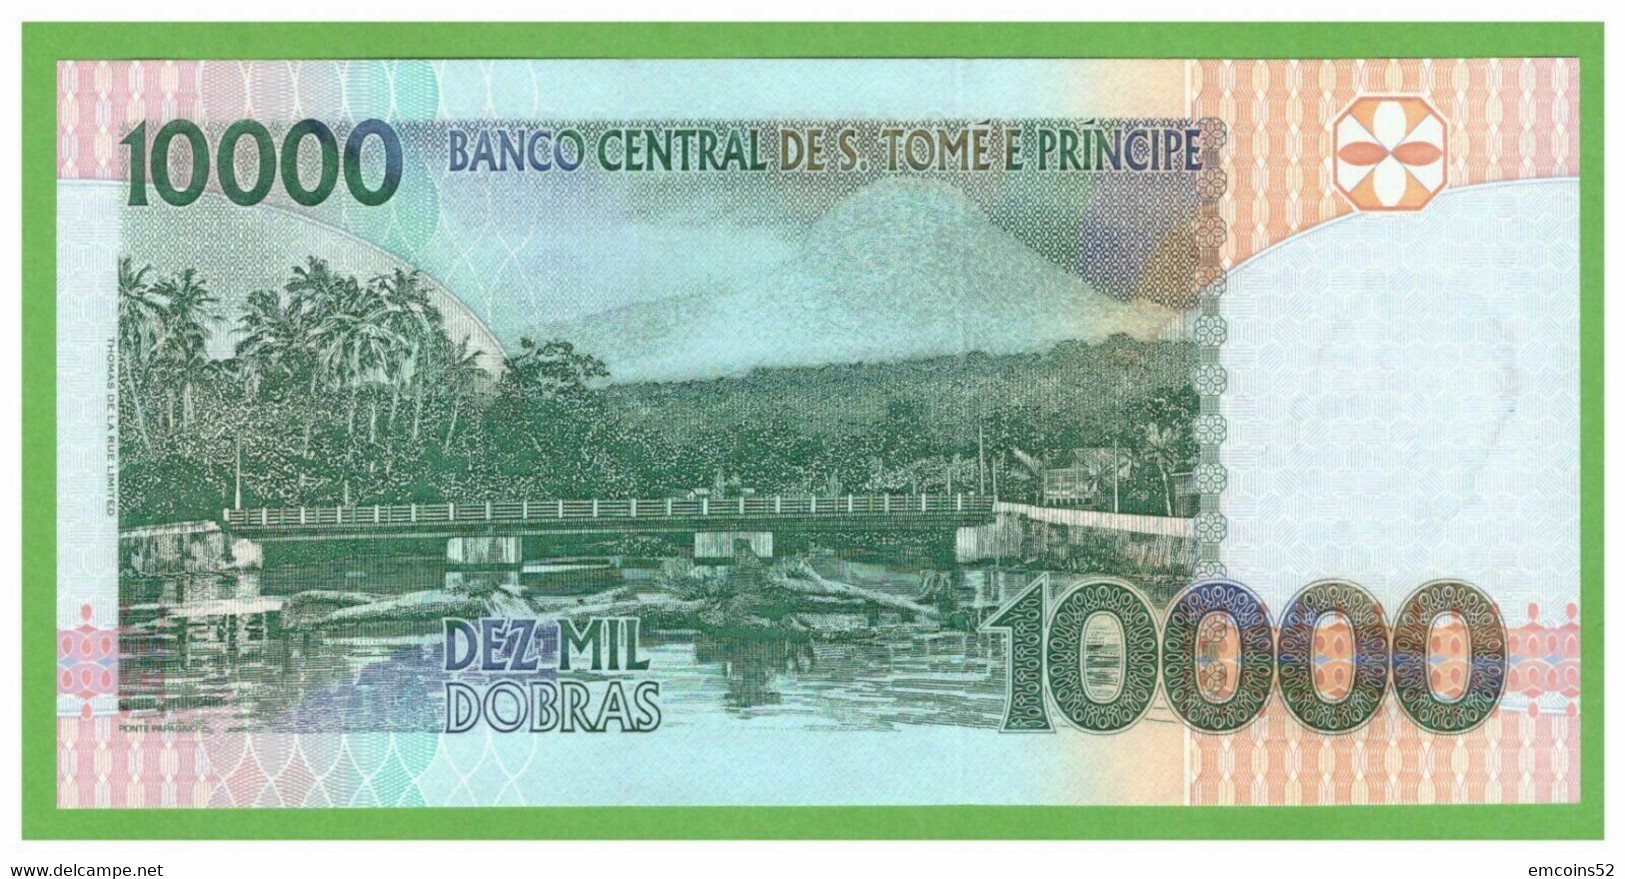 SAO TOME & PRINCIPE 10000 DOBRAS 2004  P-66c UNC - Sao Tome And Principe